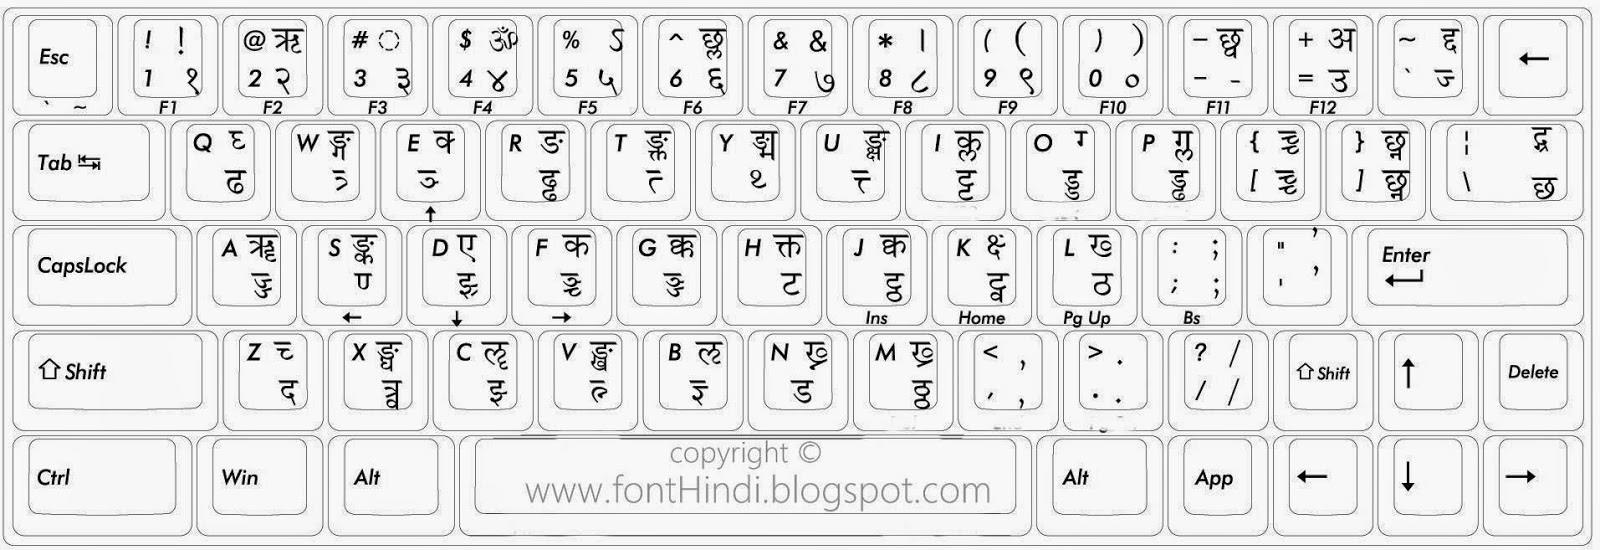 Marathi Font For Windows 10